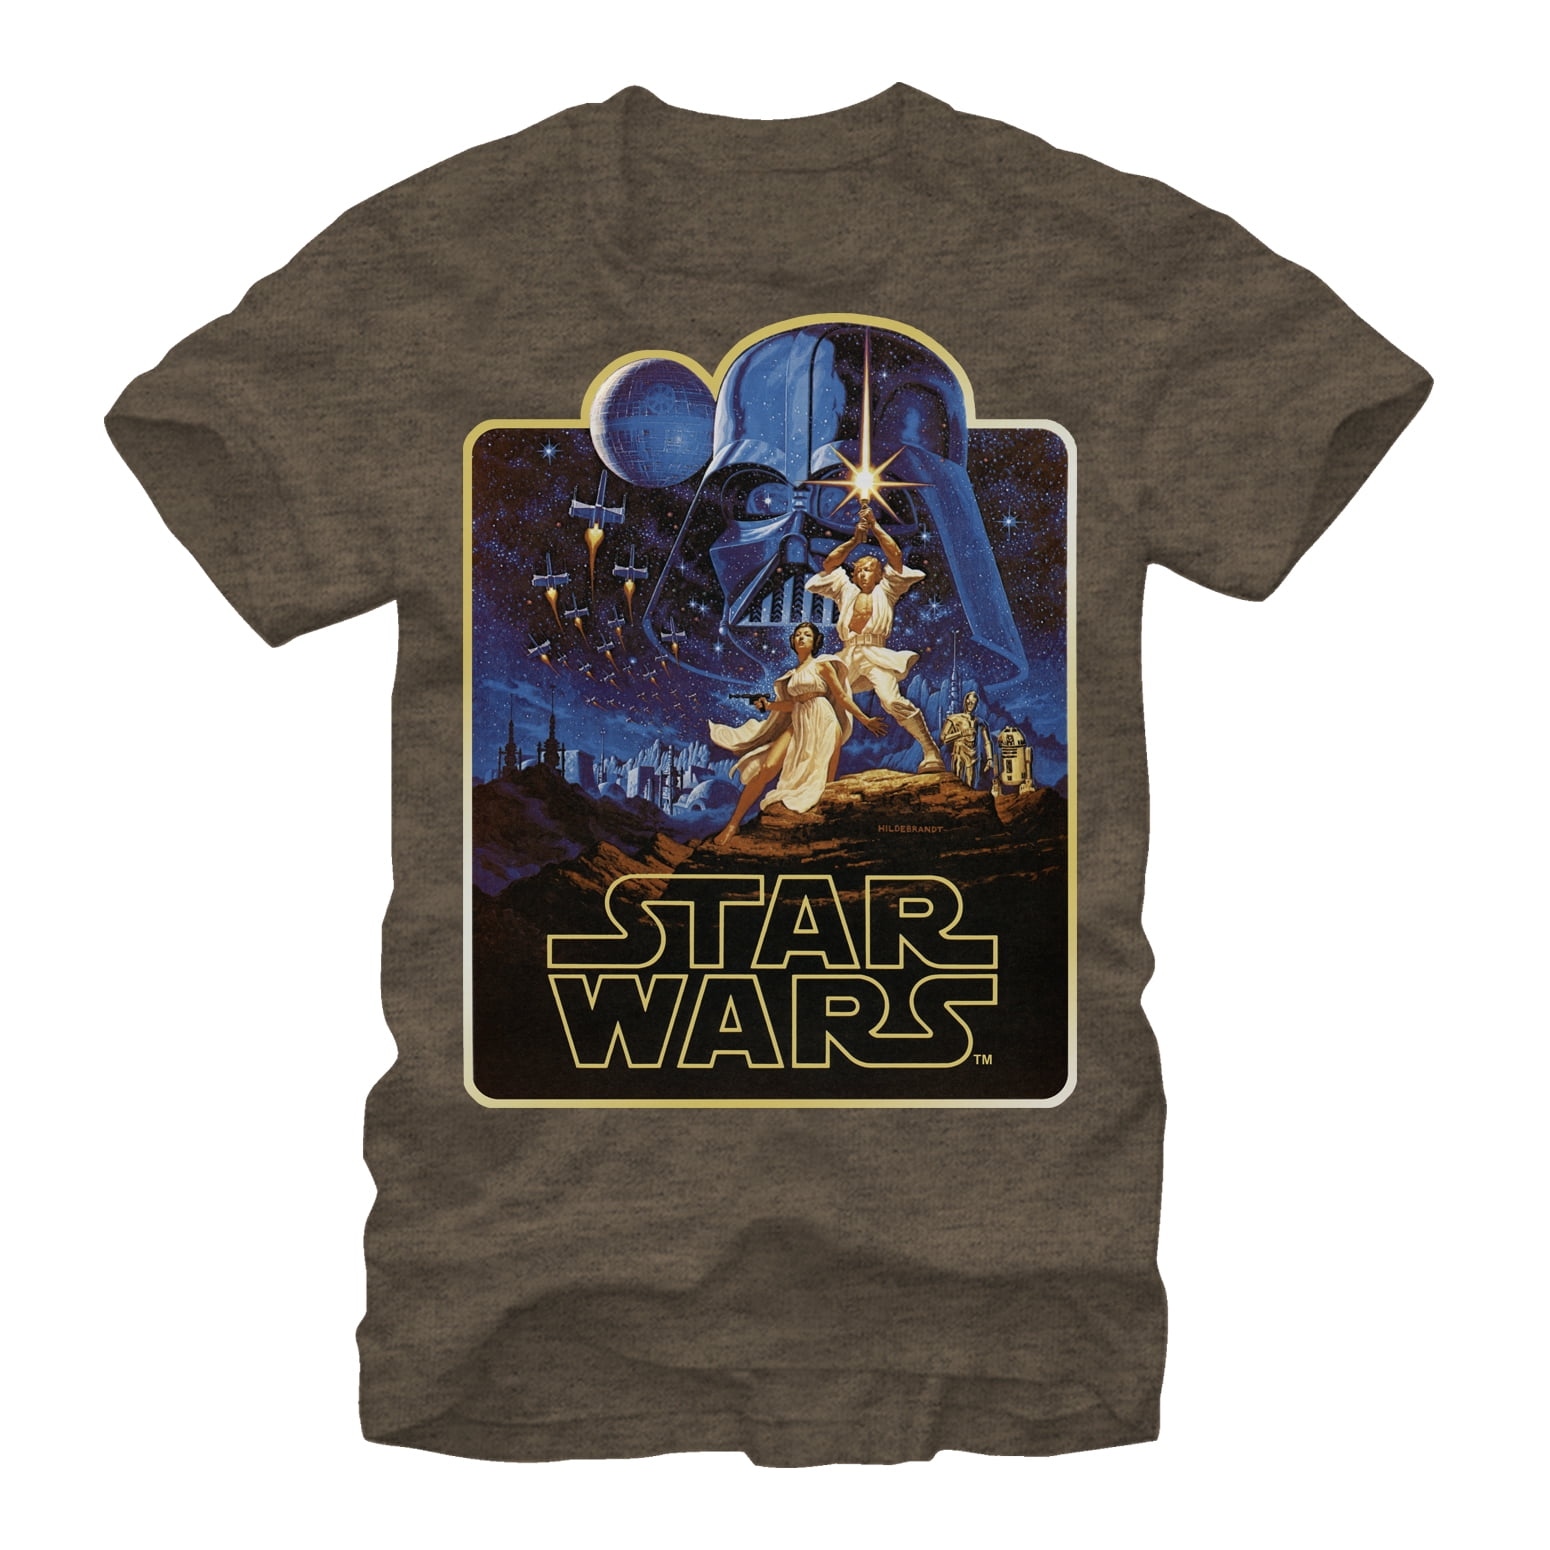 star wars shirts walmart